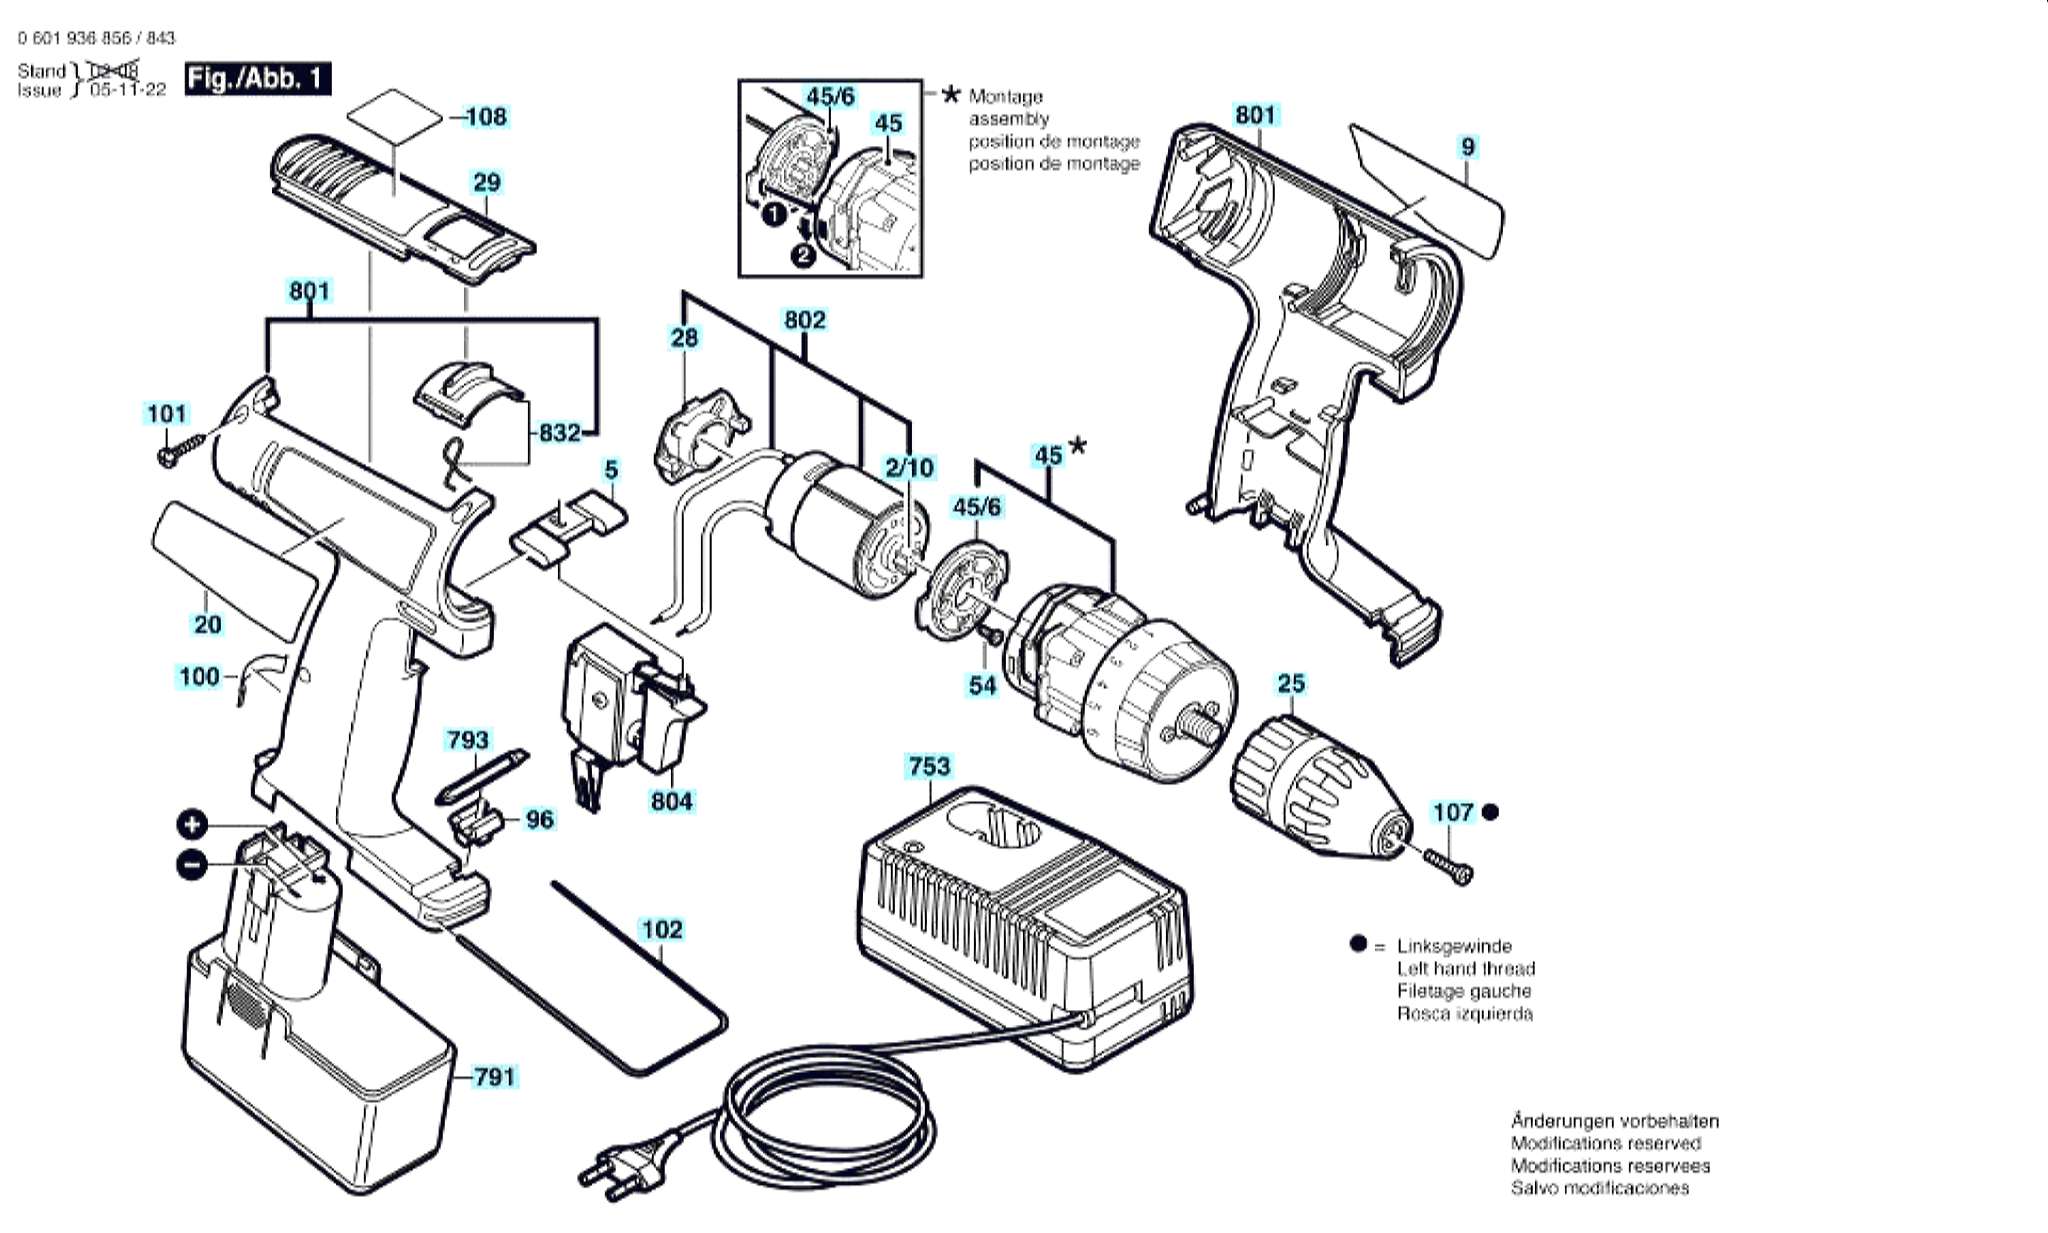 Запчасти, схема и деталировка Bosch GSR 12 VSH-2 (ТИП 0601936820)